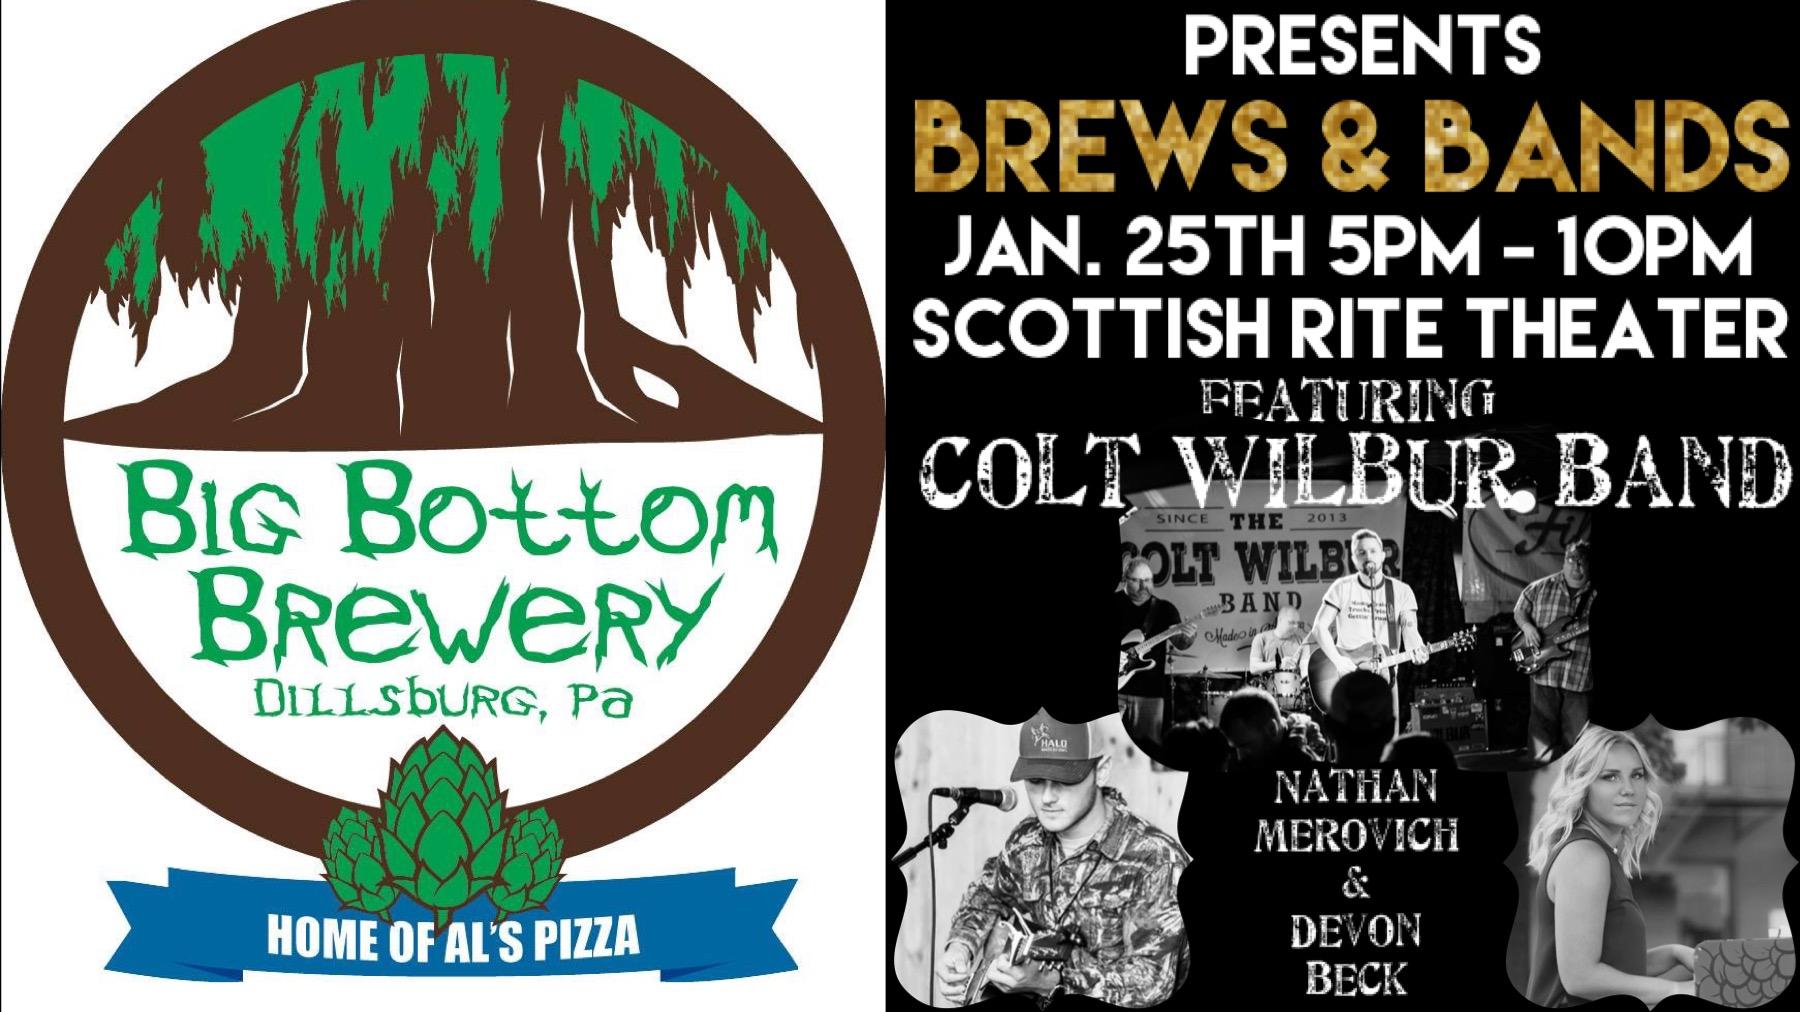 Big Bottom Brewery Presents: Brews & Bands